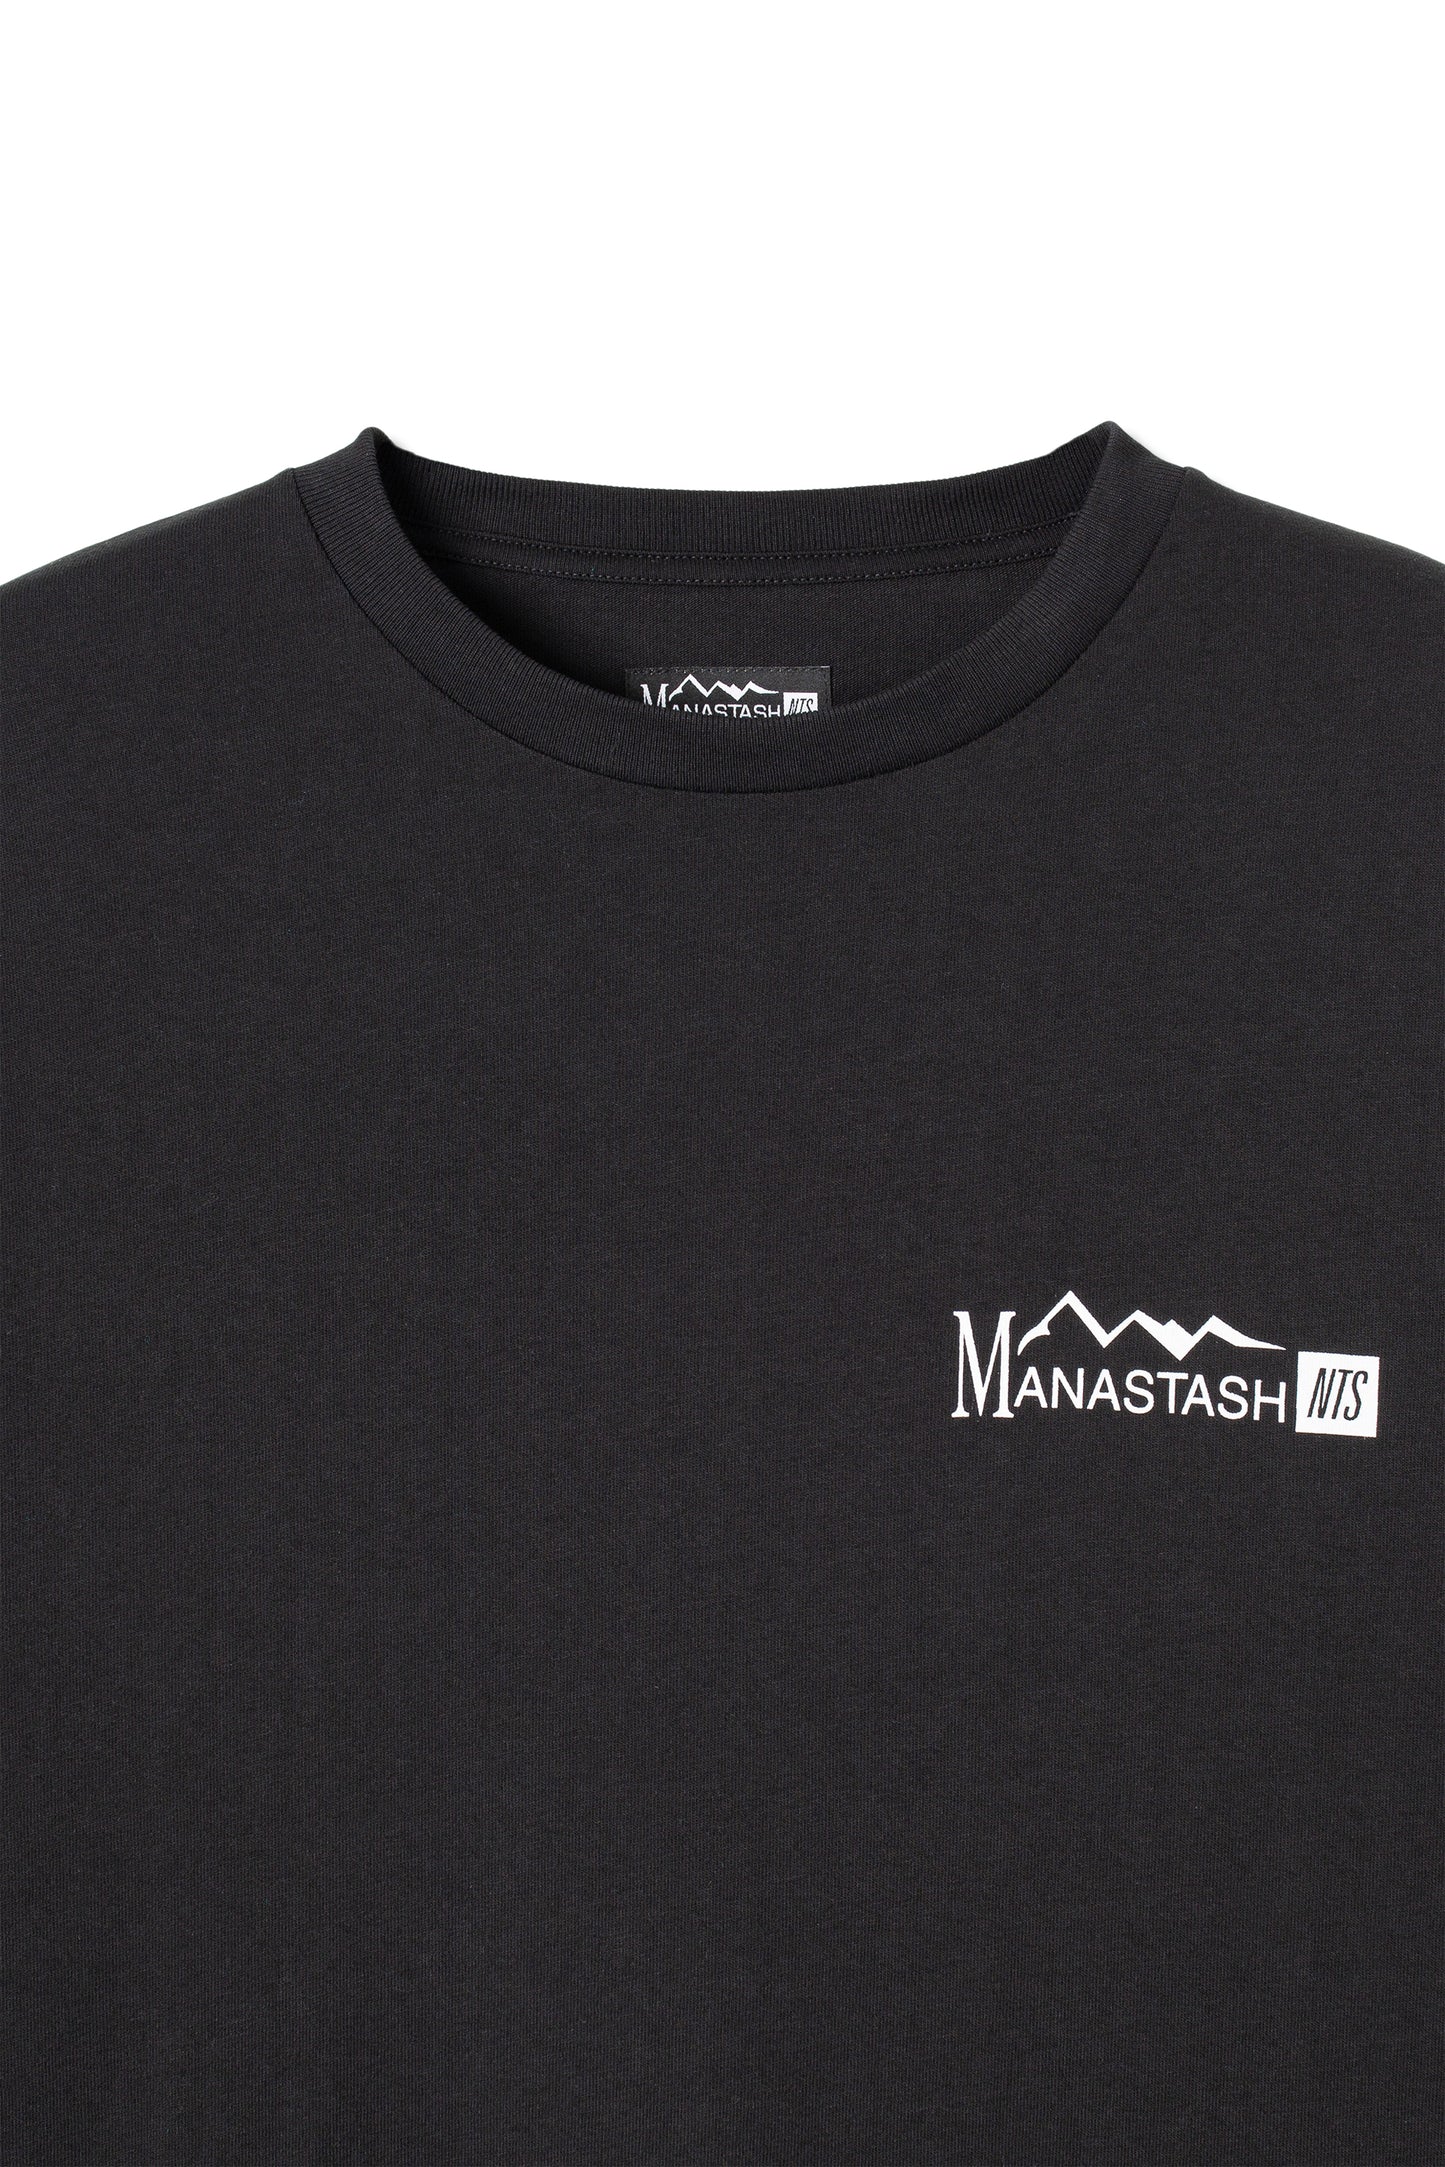 NTS x Manastash Long sleeve T-shirt - Black